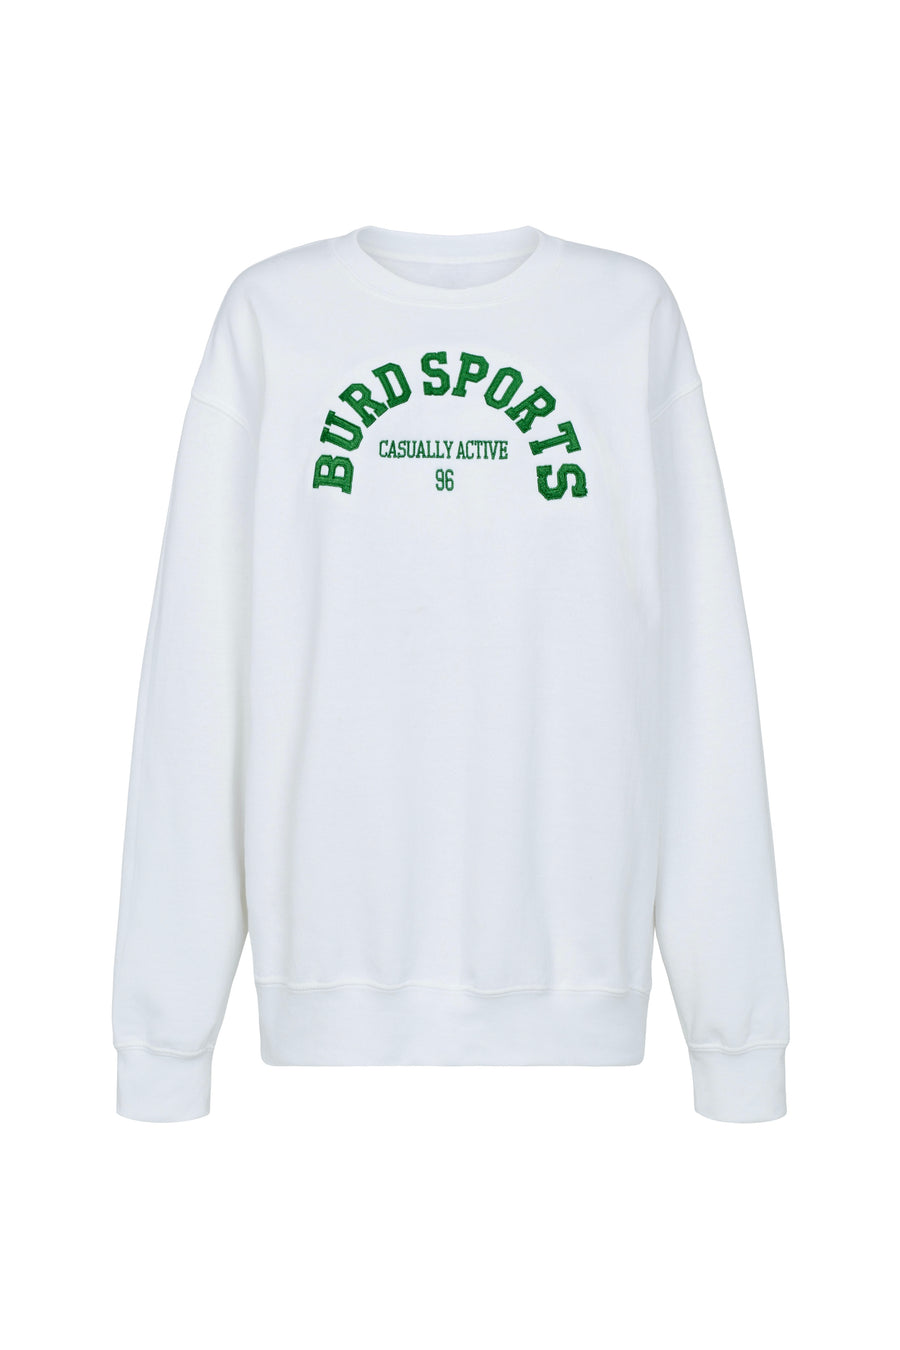 Burd Sports Sweatshirt - White & Green